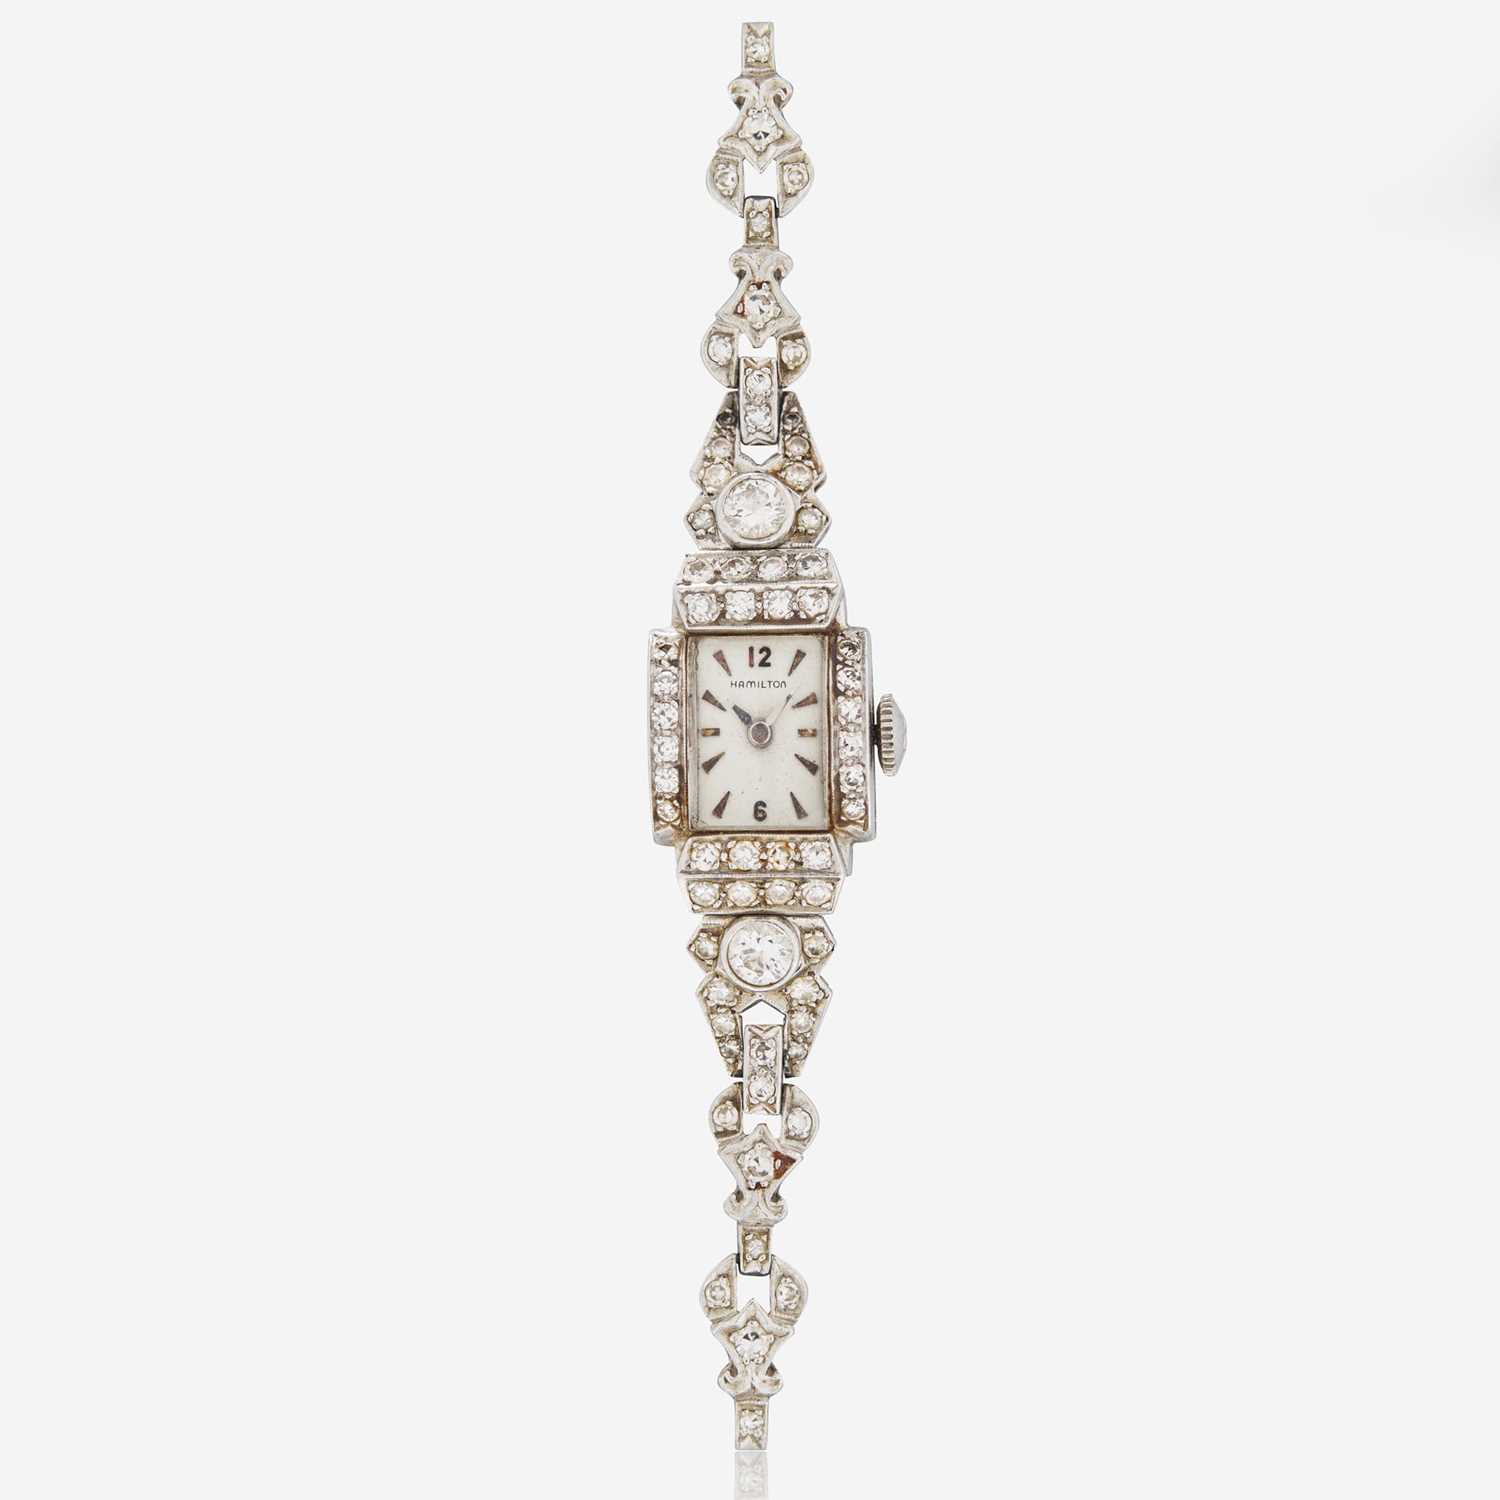 Lot 51 - A Ladies Platinum and Diamond Art Deco  Hamilton Bracelet  Watch